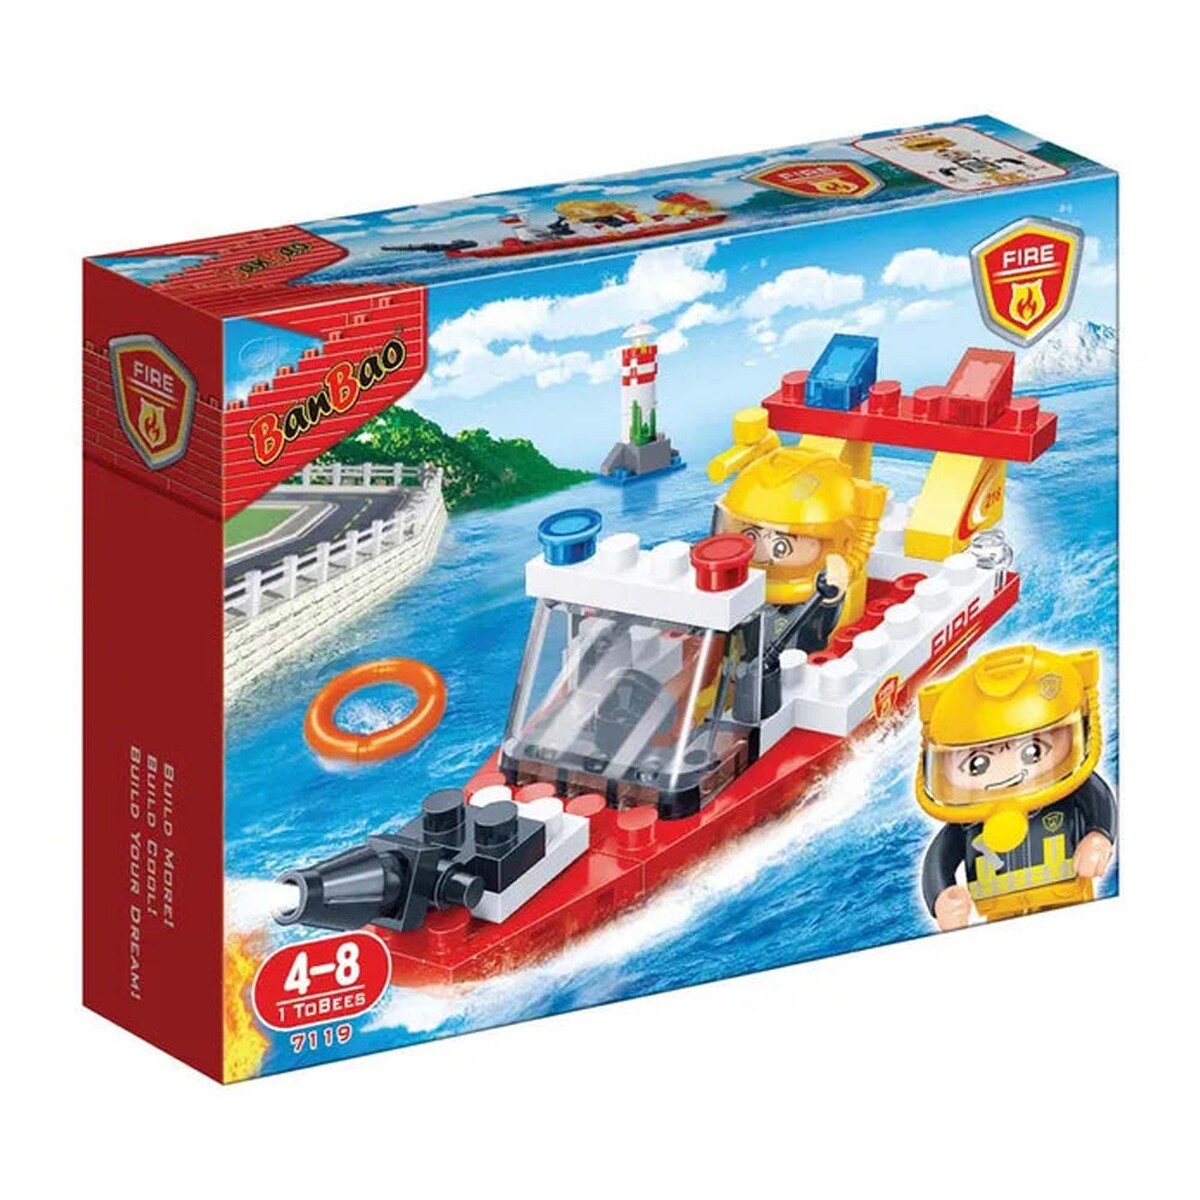 Banbao Fire Rescue Boat Building Set, 62 Pcs, Multicolor, 7119